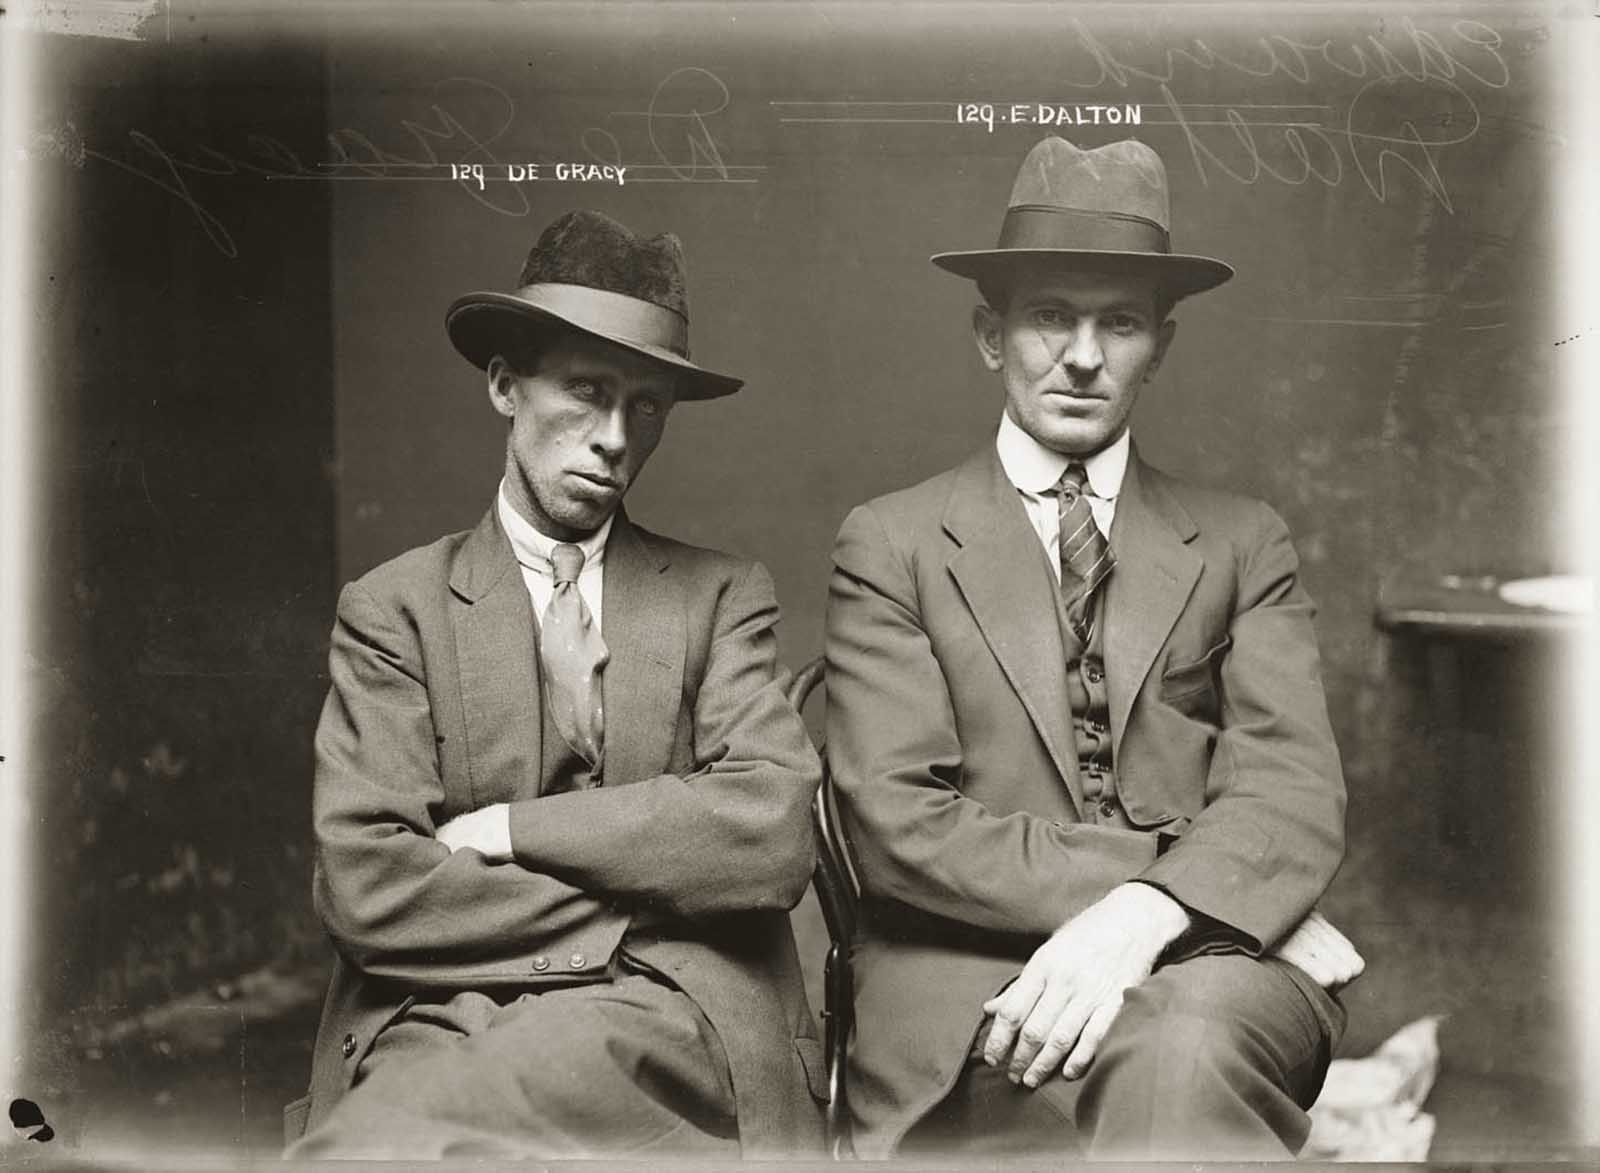 De Gracy and Edward Dalton, 1920.